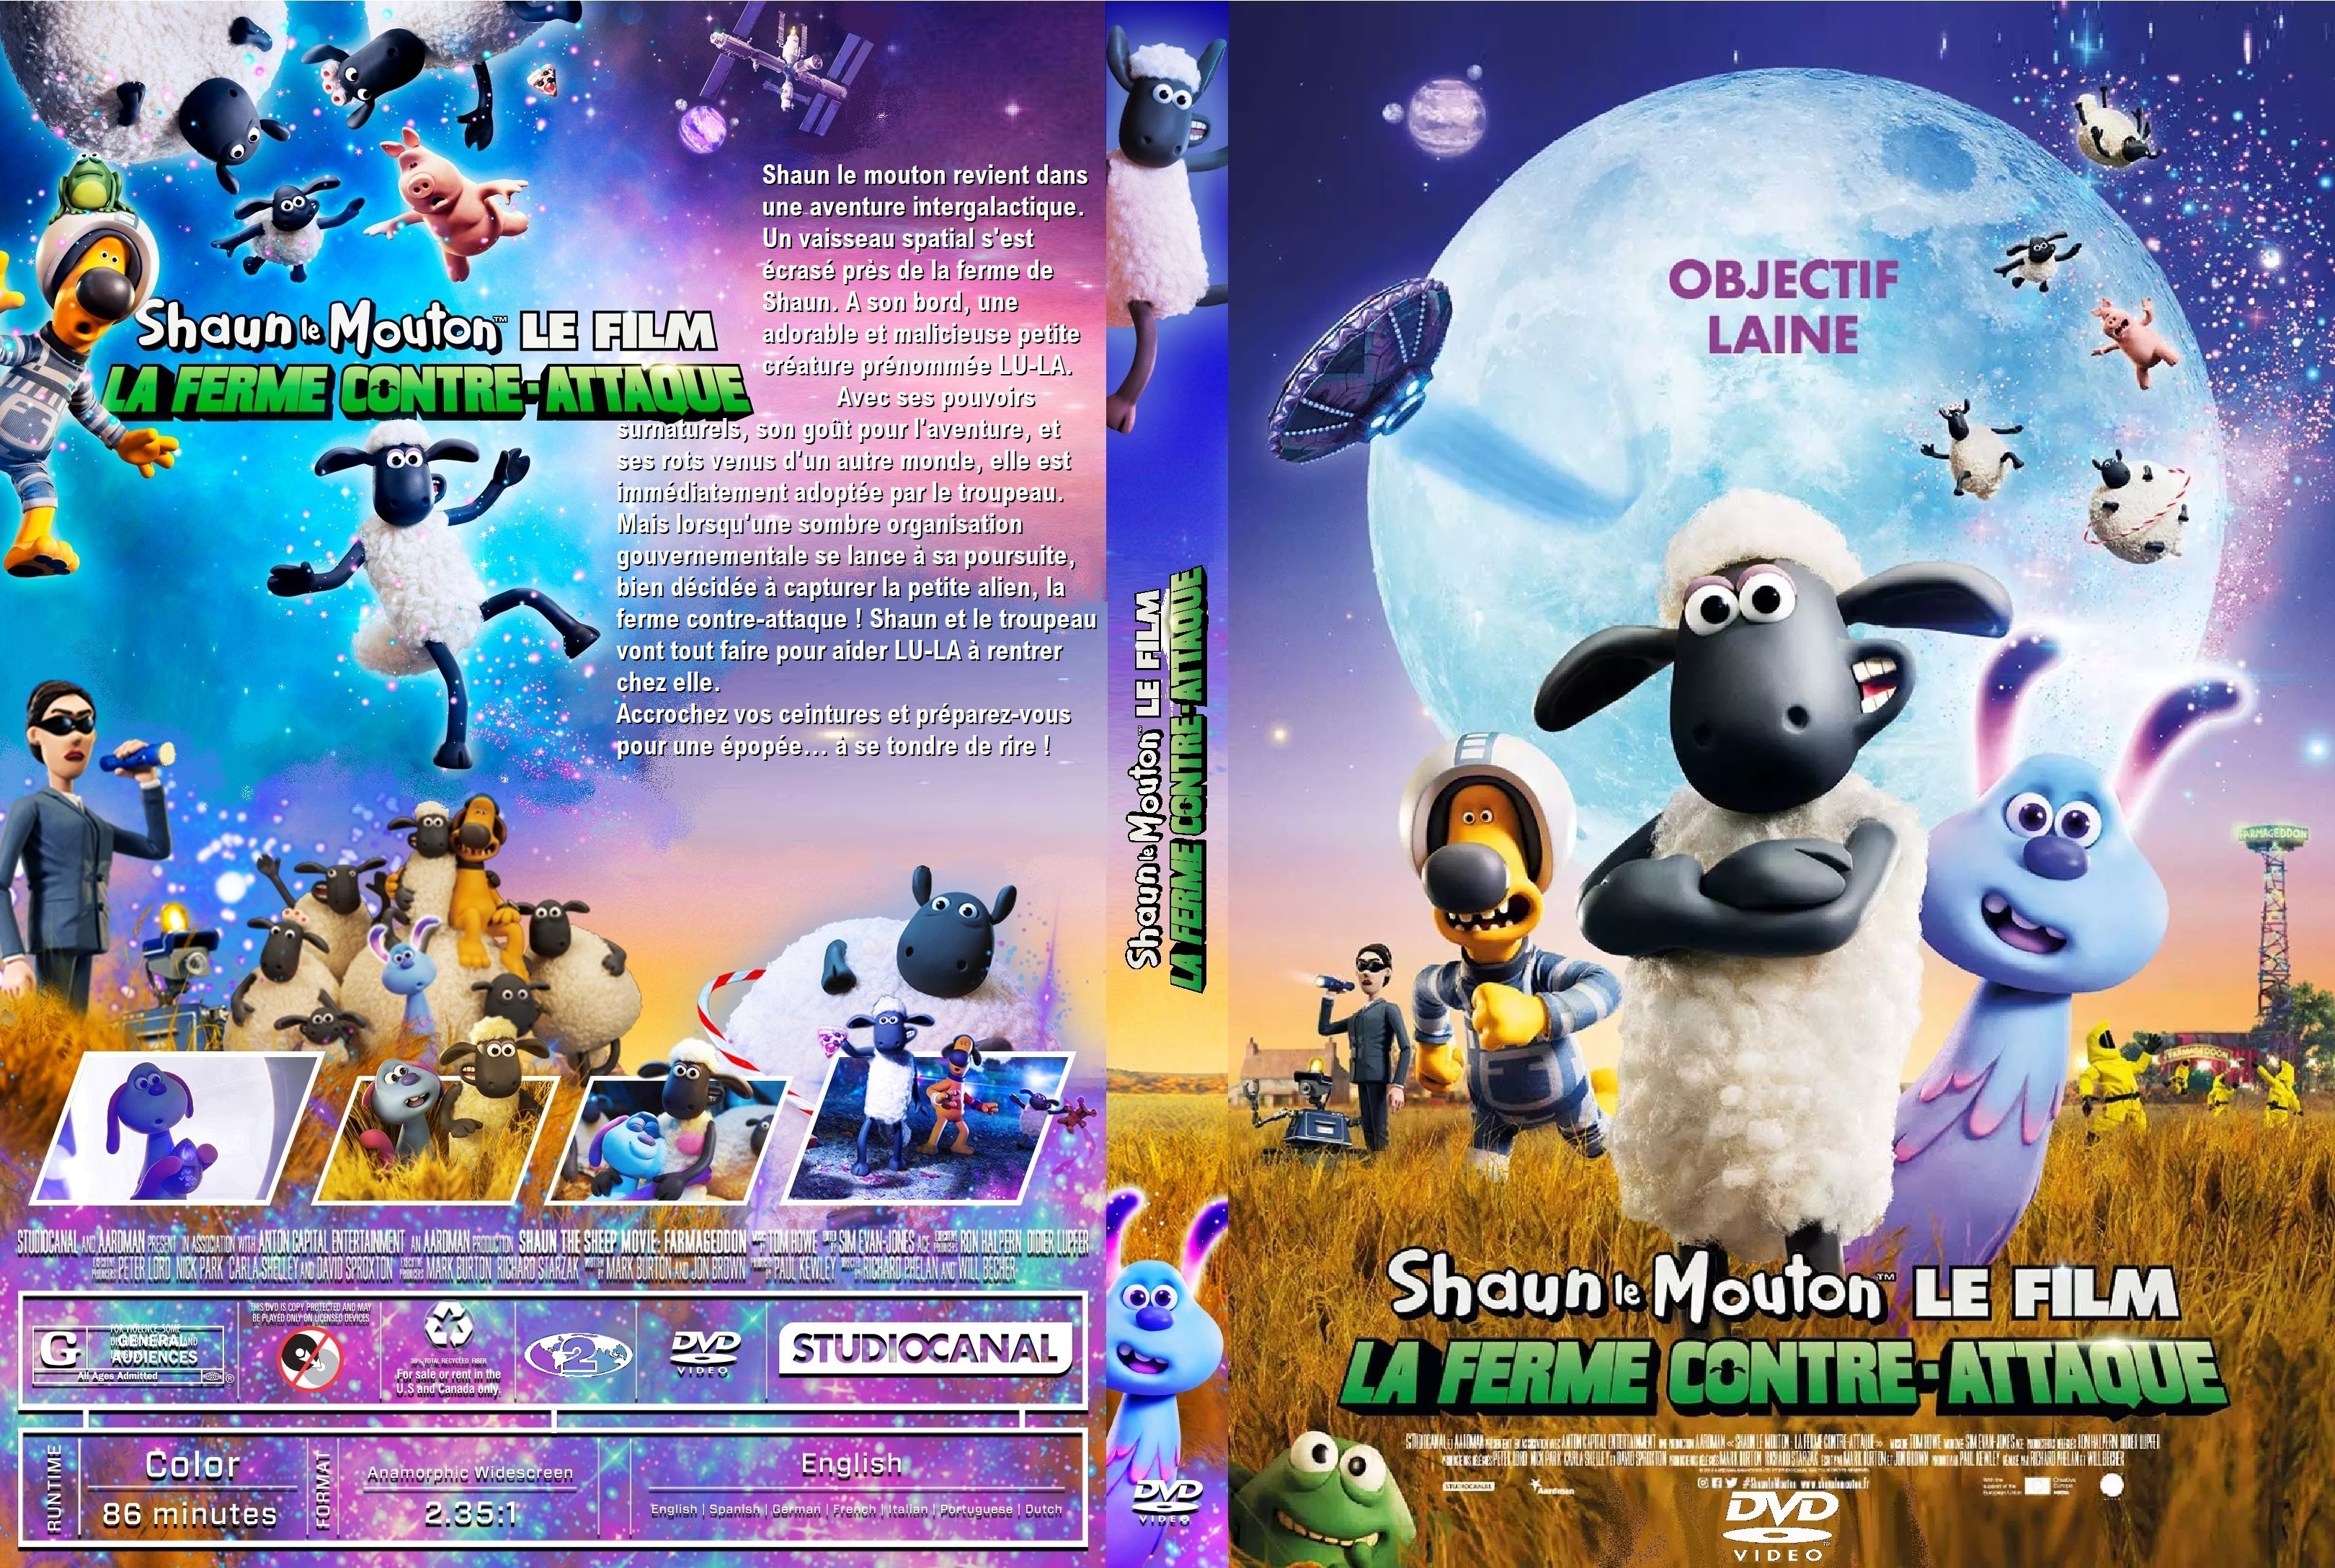 Jaquette DVD Shaun le Mouton Le Film La  Ferme Contre-Attaque custom